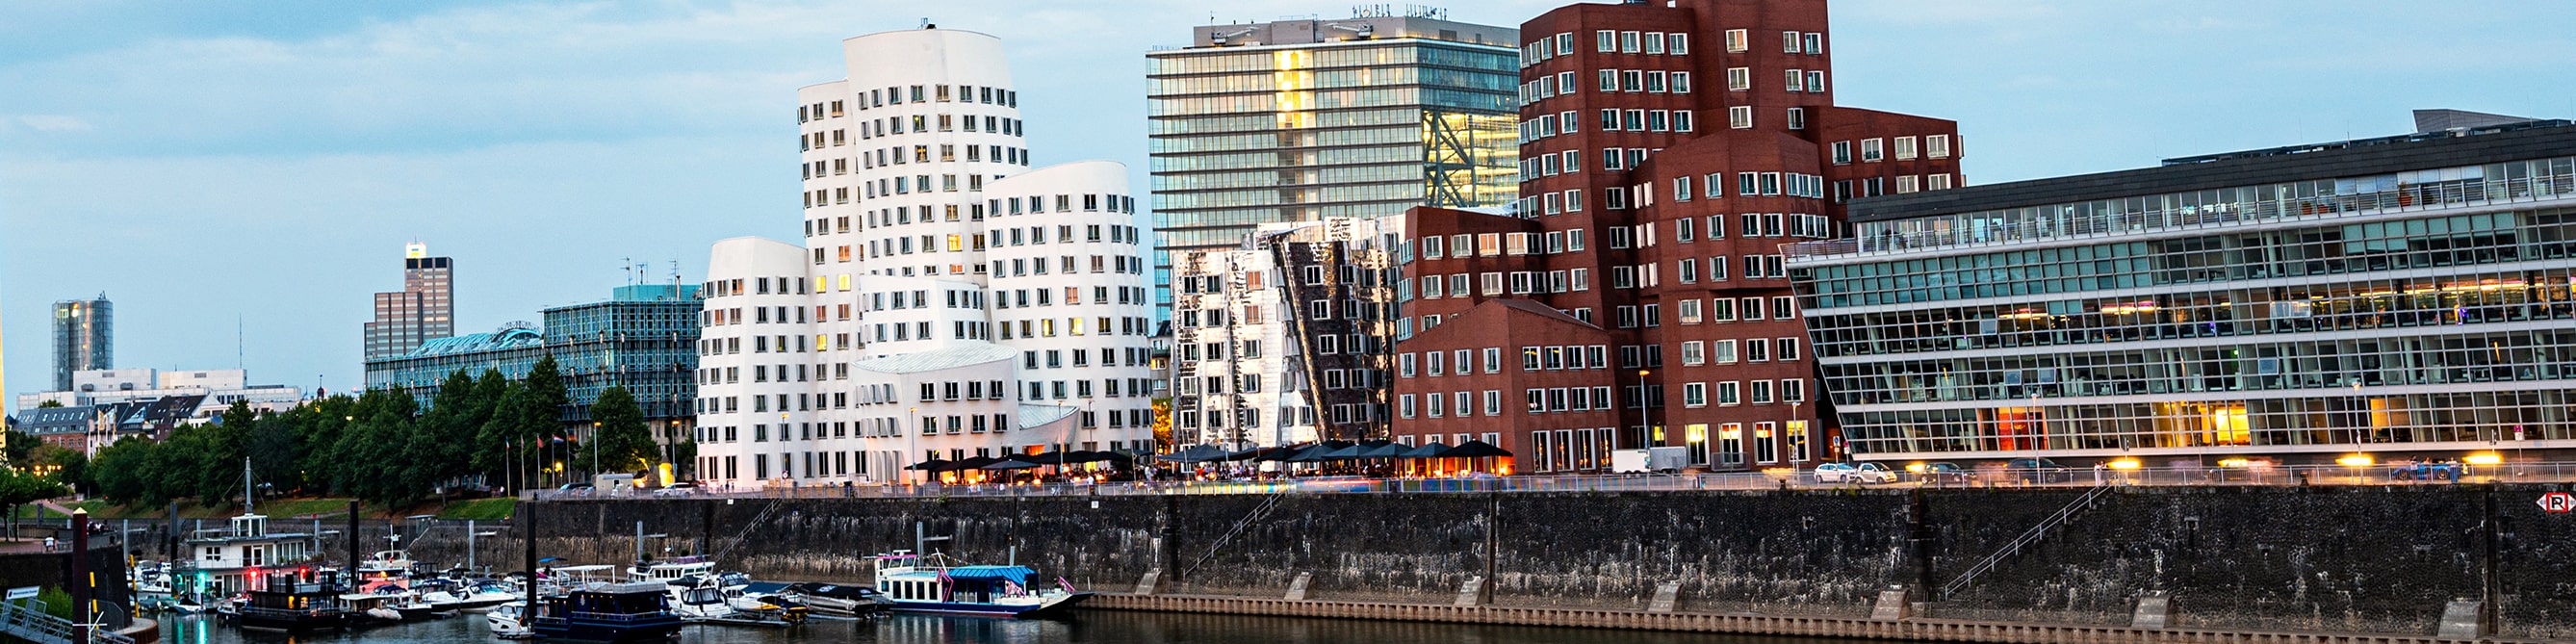 Panorama Düsseldorf Hafen